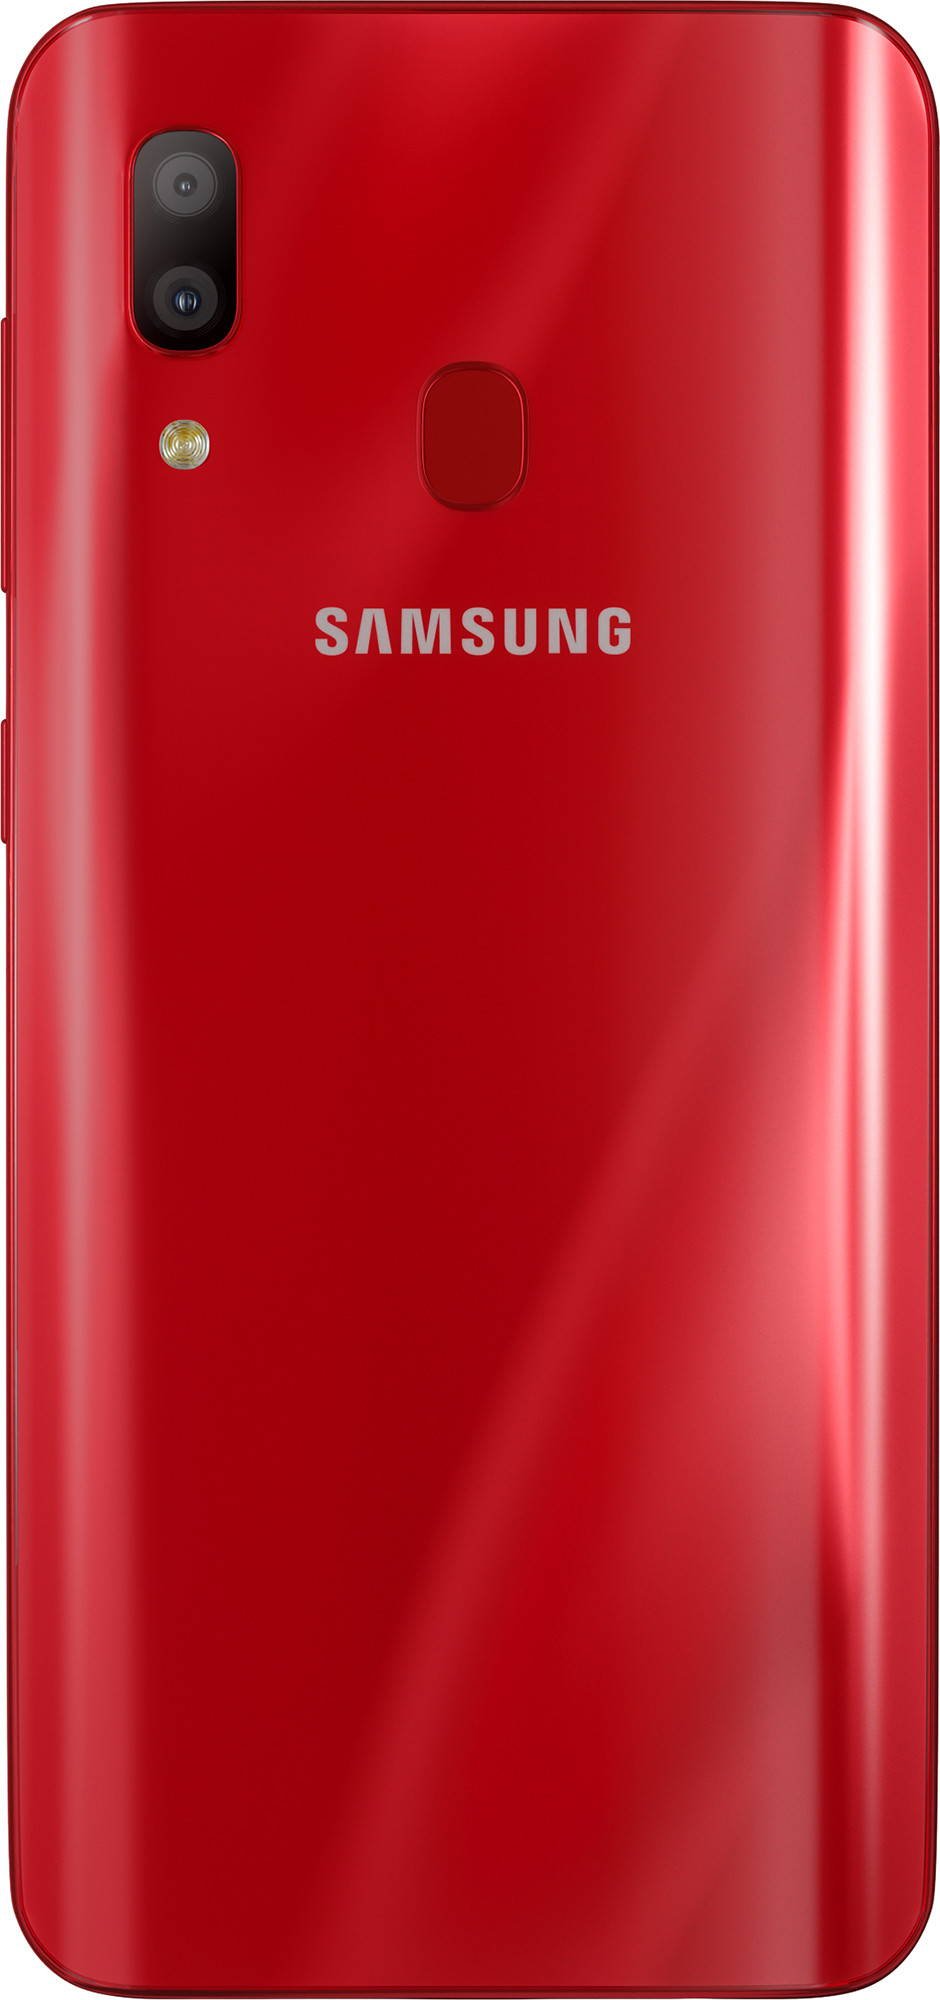 Смартфон Samsung Galaxy A40 64GB Red (Красный)